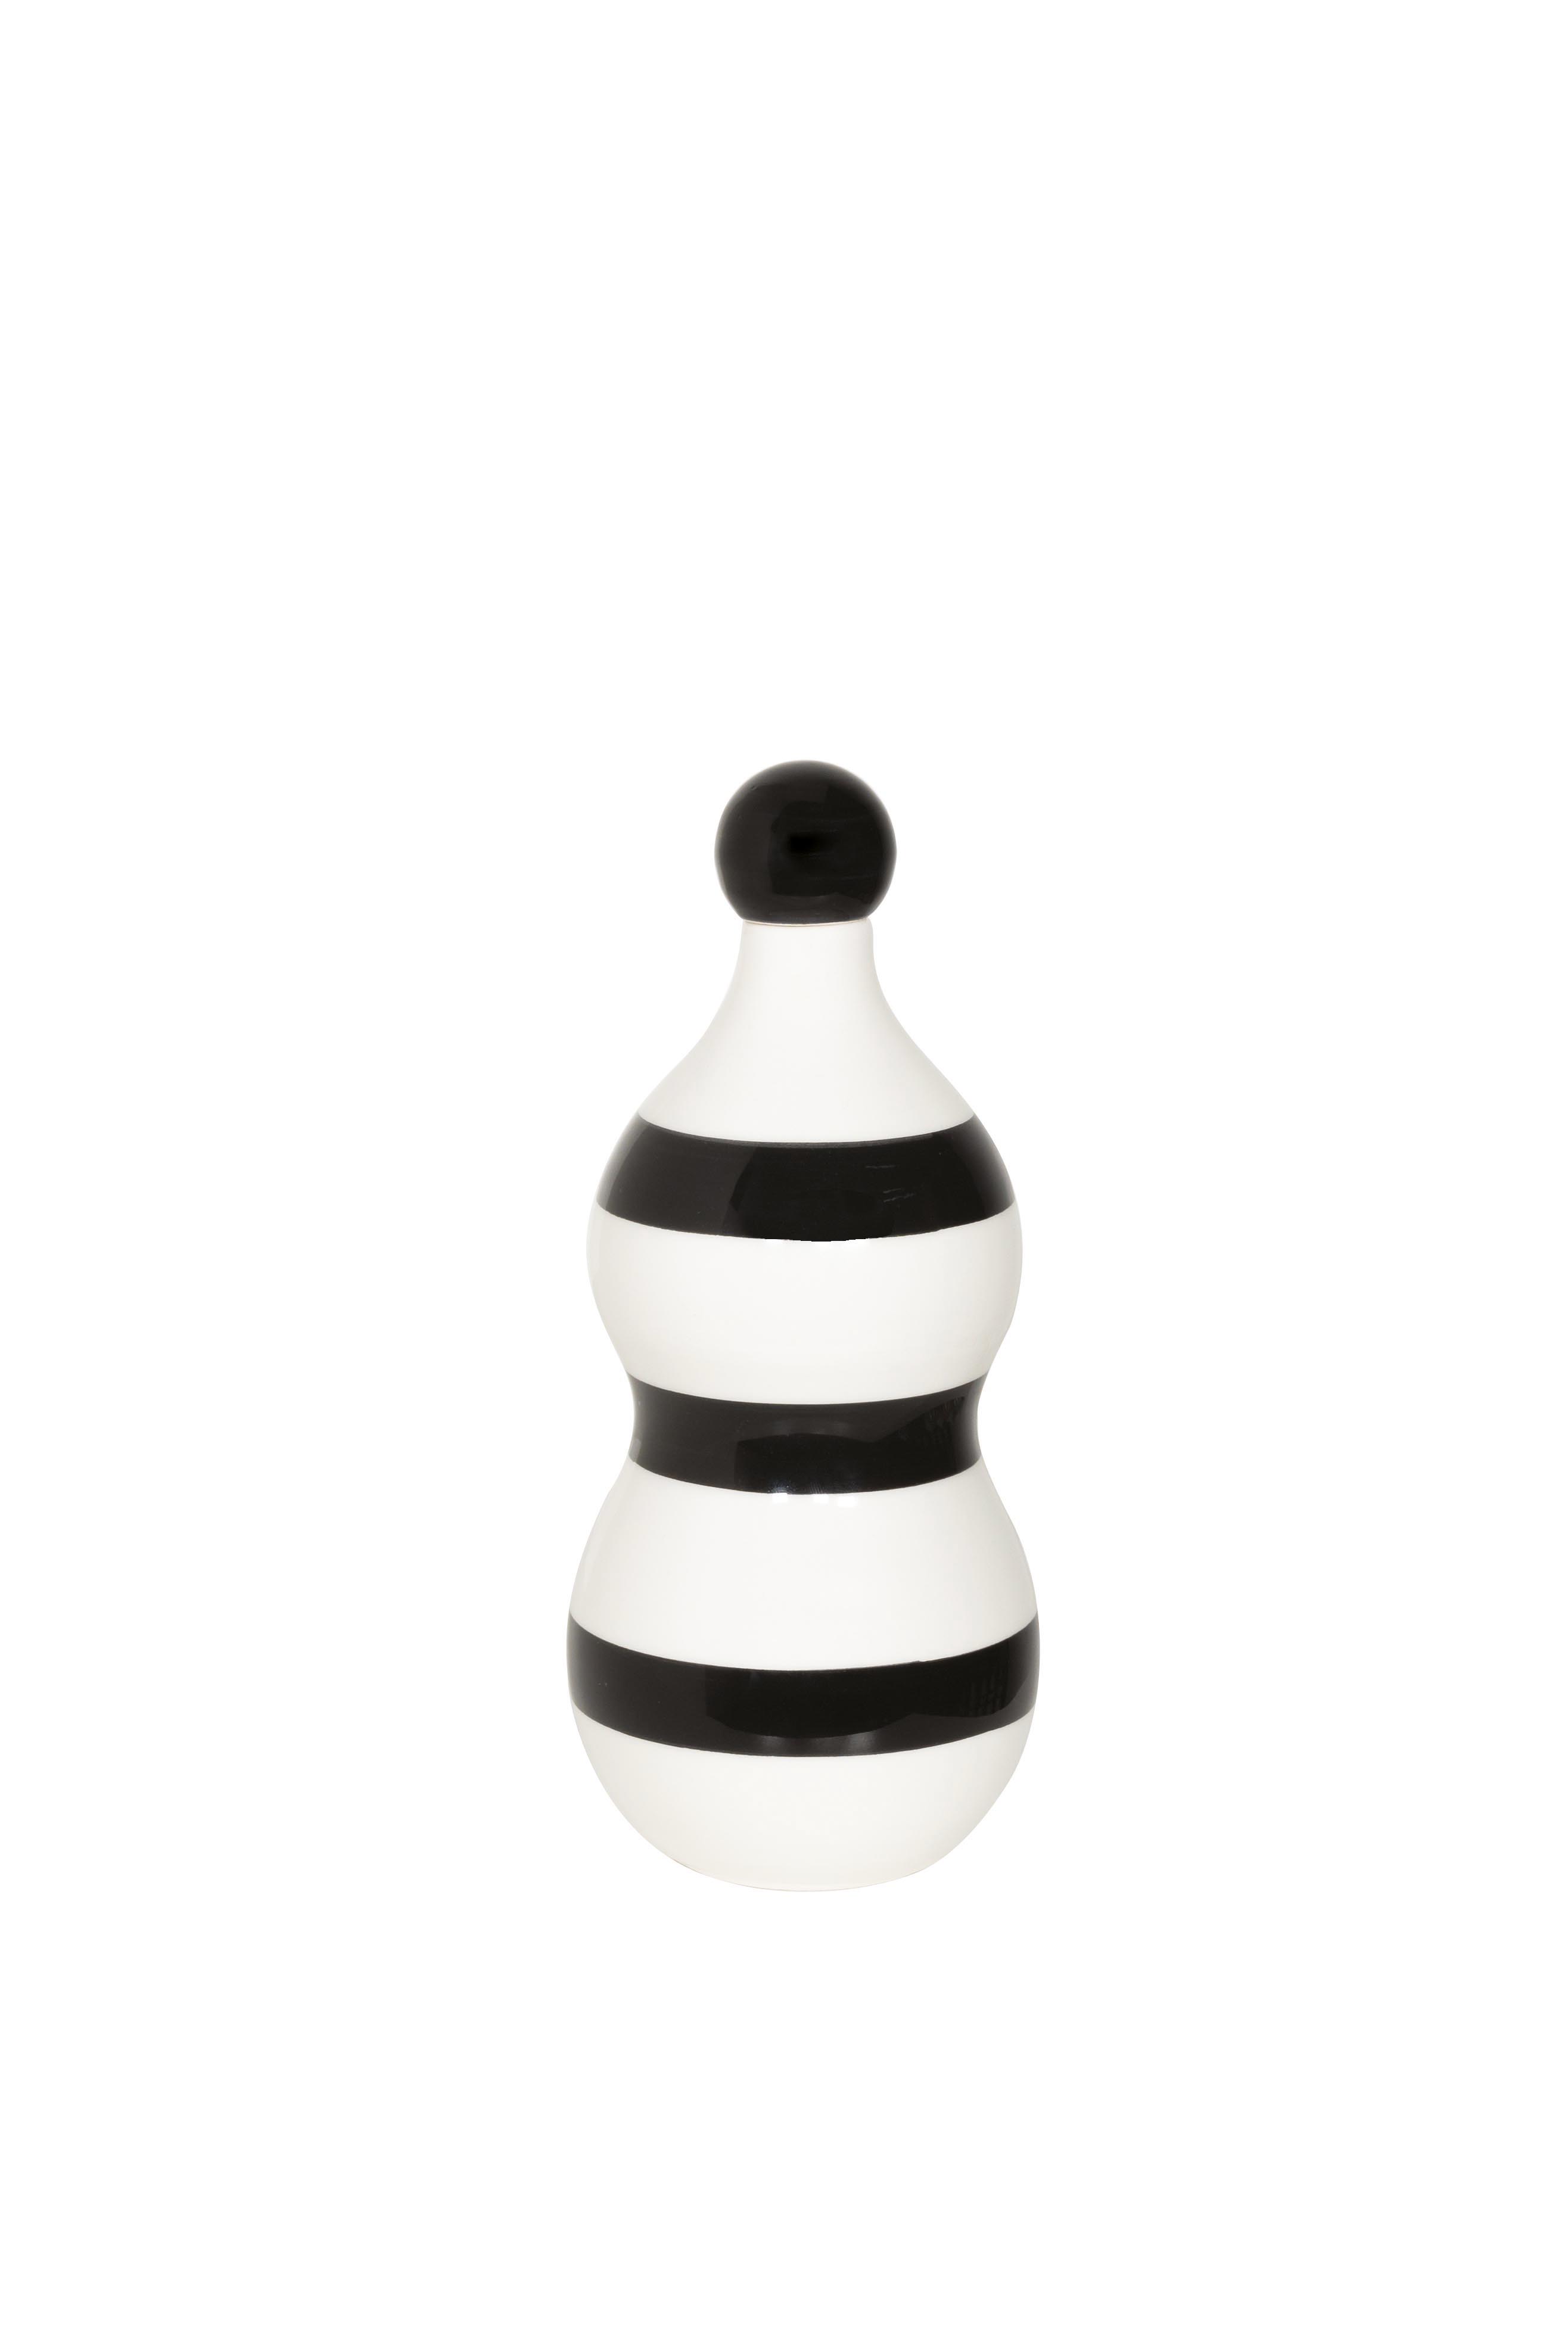 Zafferano Lido Keramik Flasche mit horizontalen Ringen in schwarz